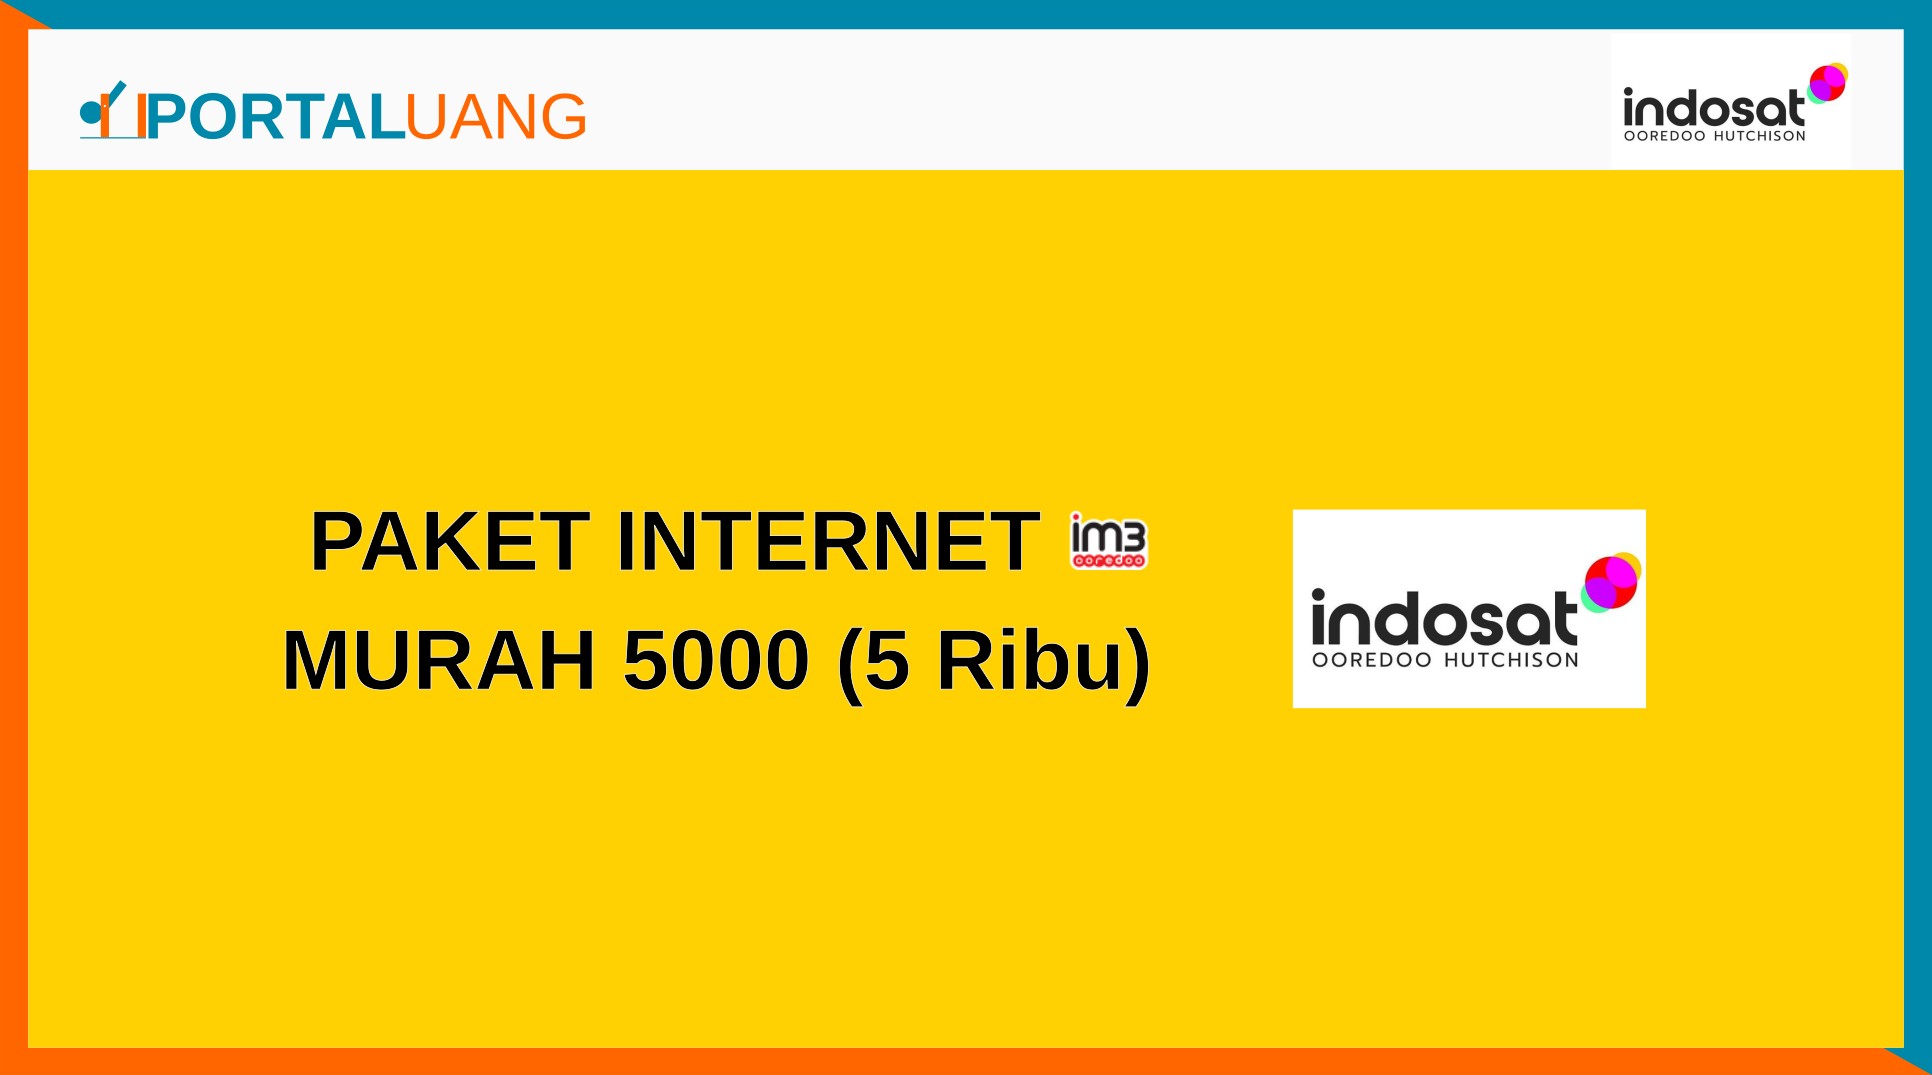 5 Paket Internet Indosat (IM3) Murah 5000 (5 Ribu) 2022